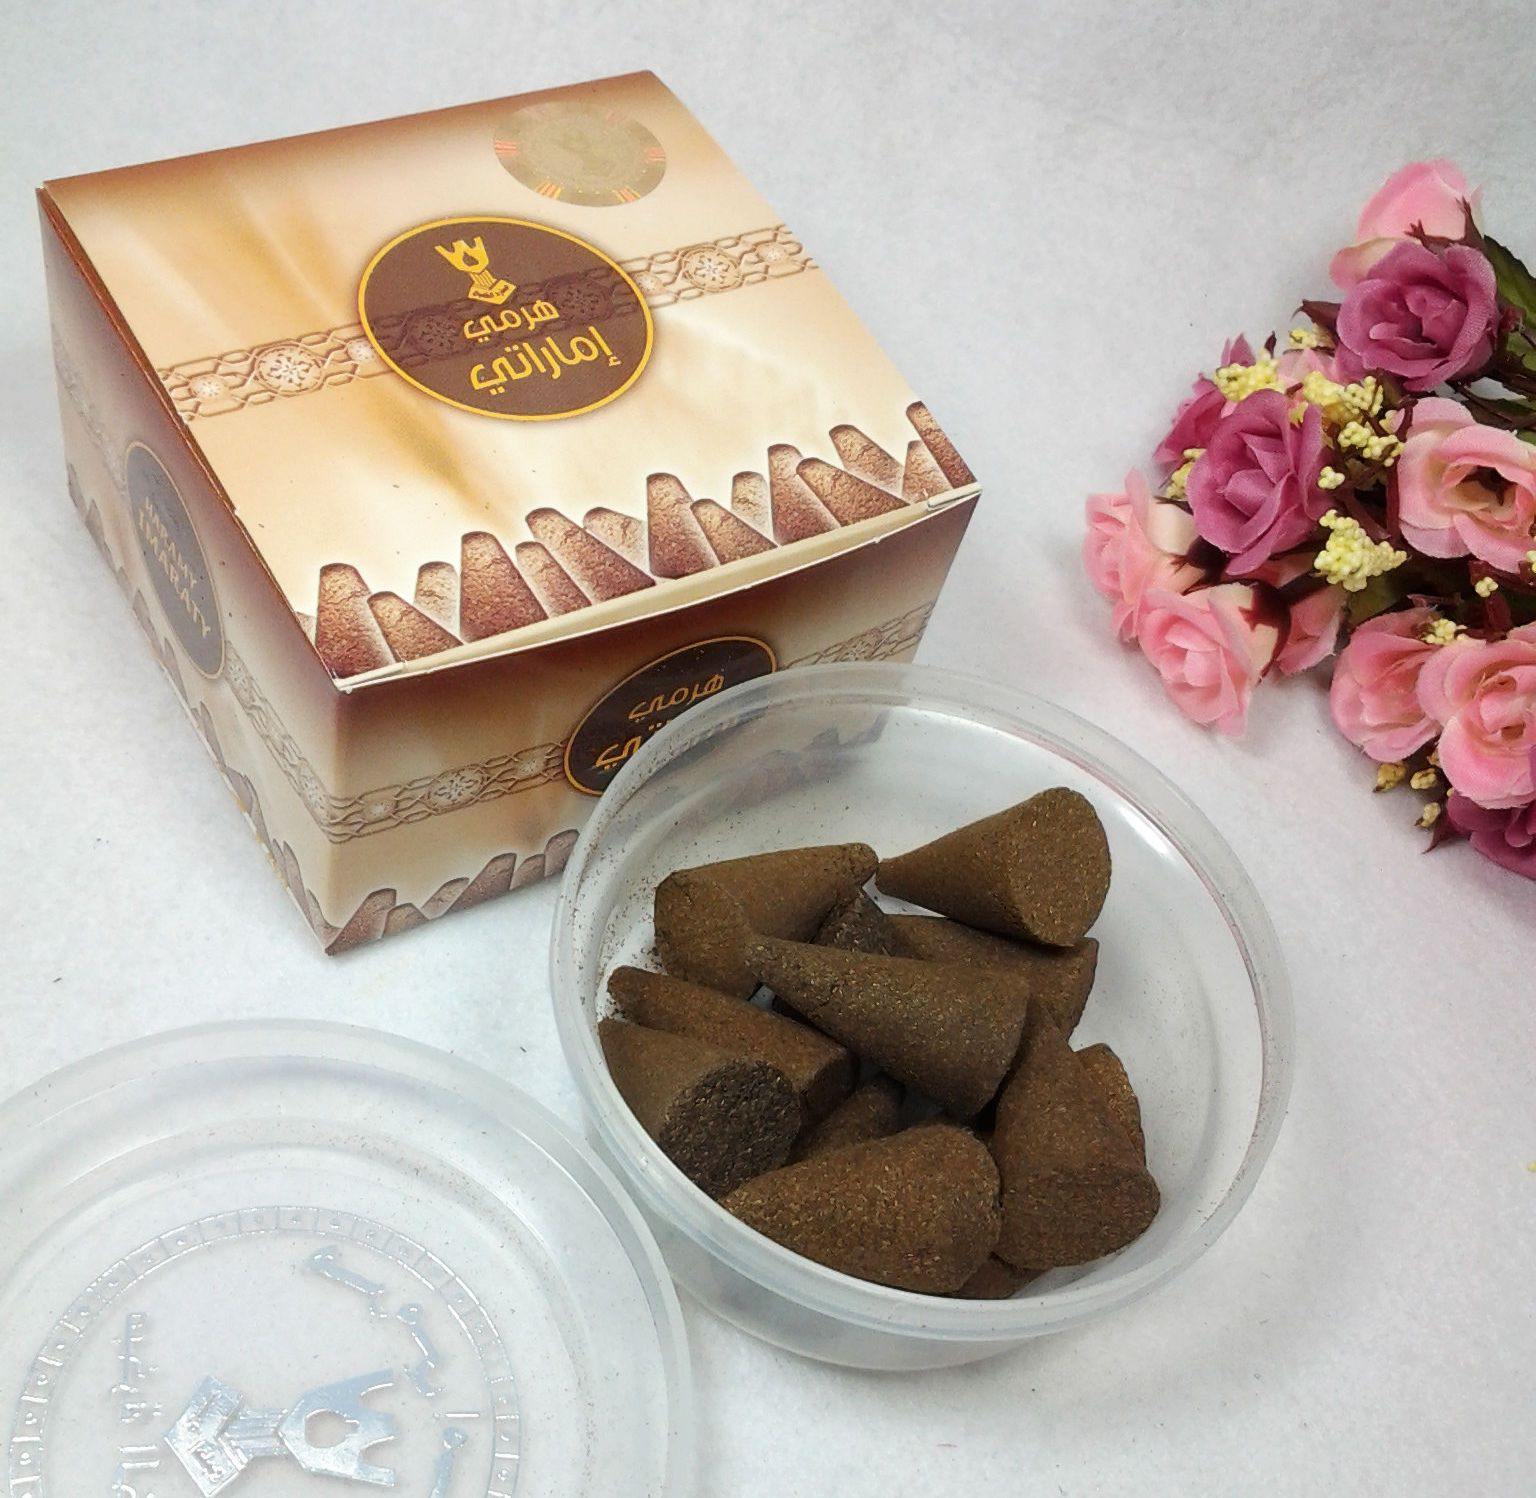 Harmi Imaraty Perfume Home Incense Saudi Arabian Mabkharat AL-Khaleej 40g بخور - Arabian Shopping Zone